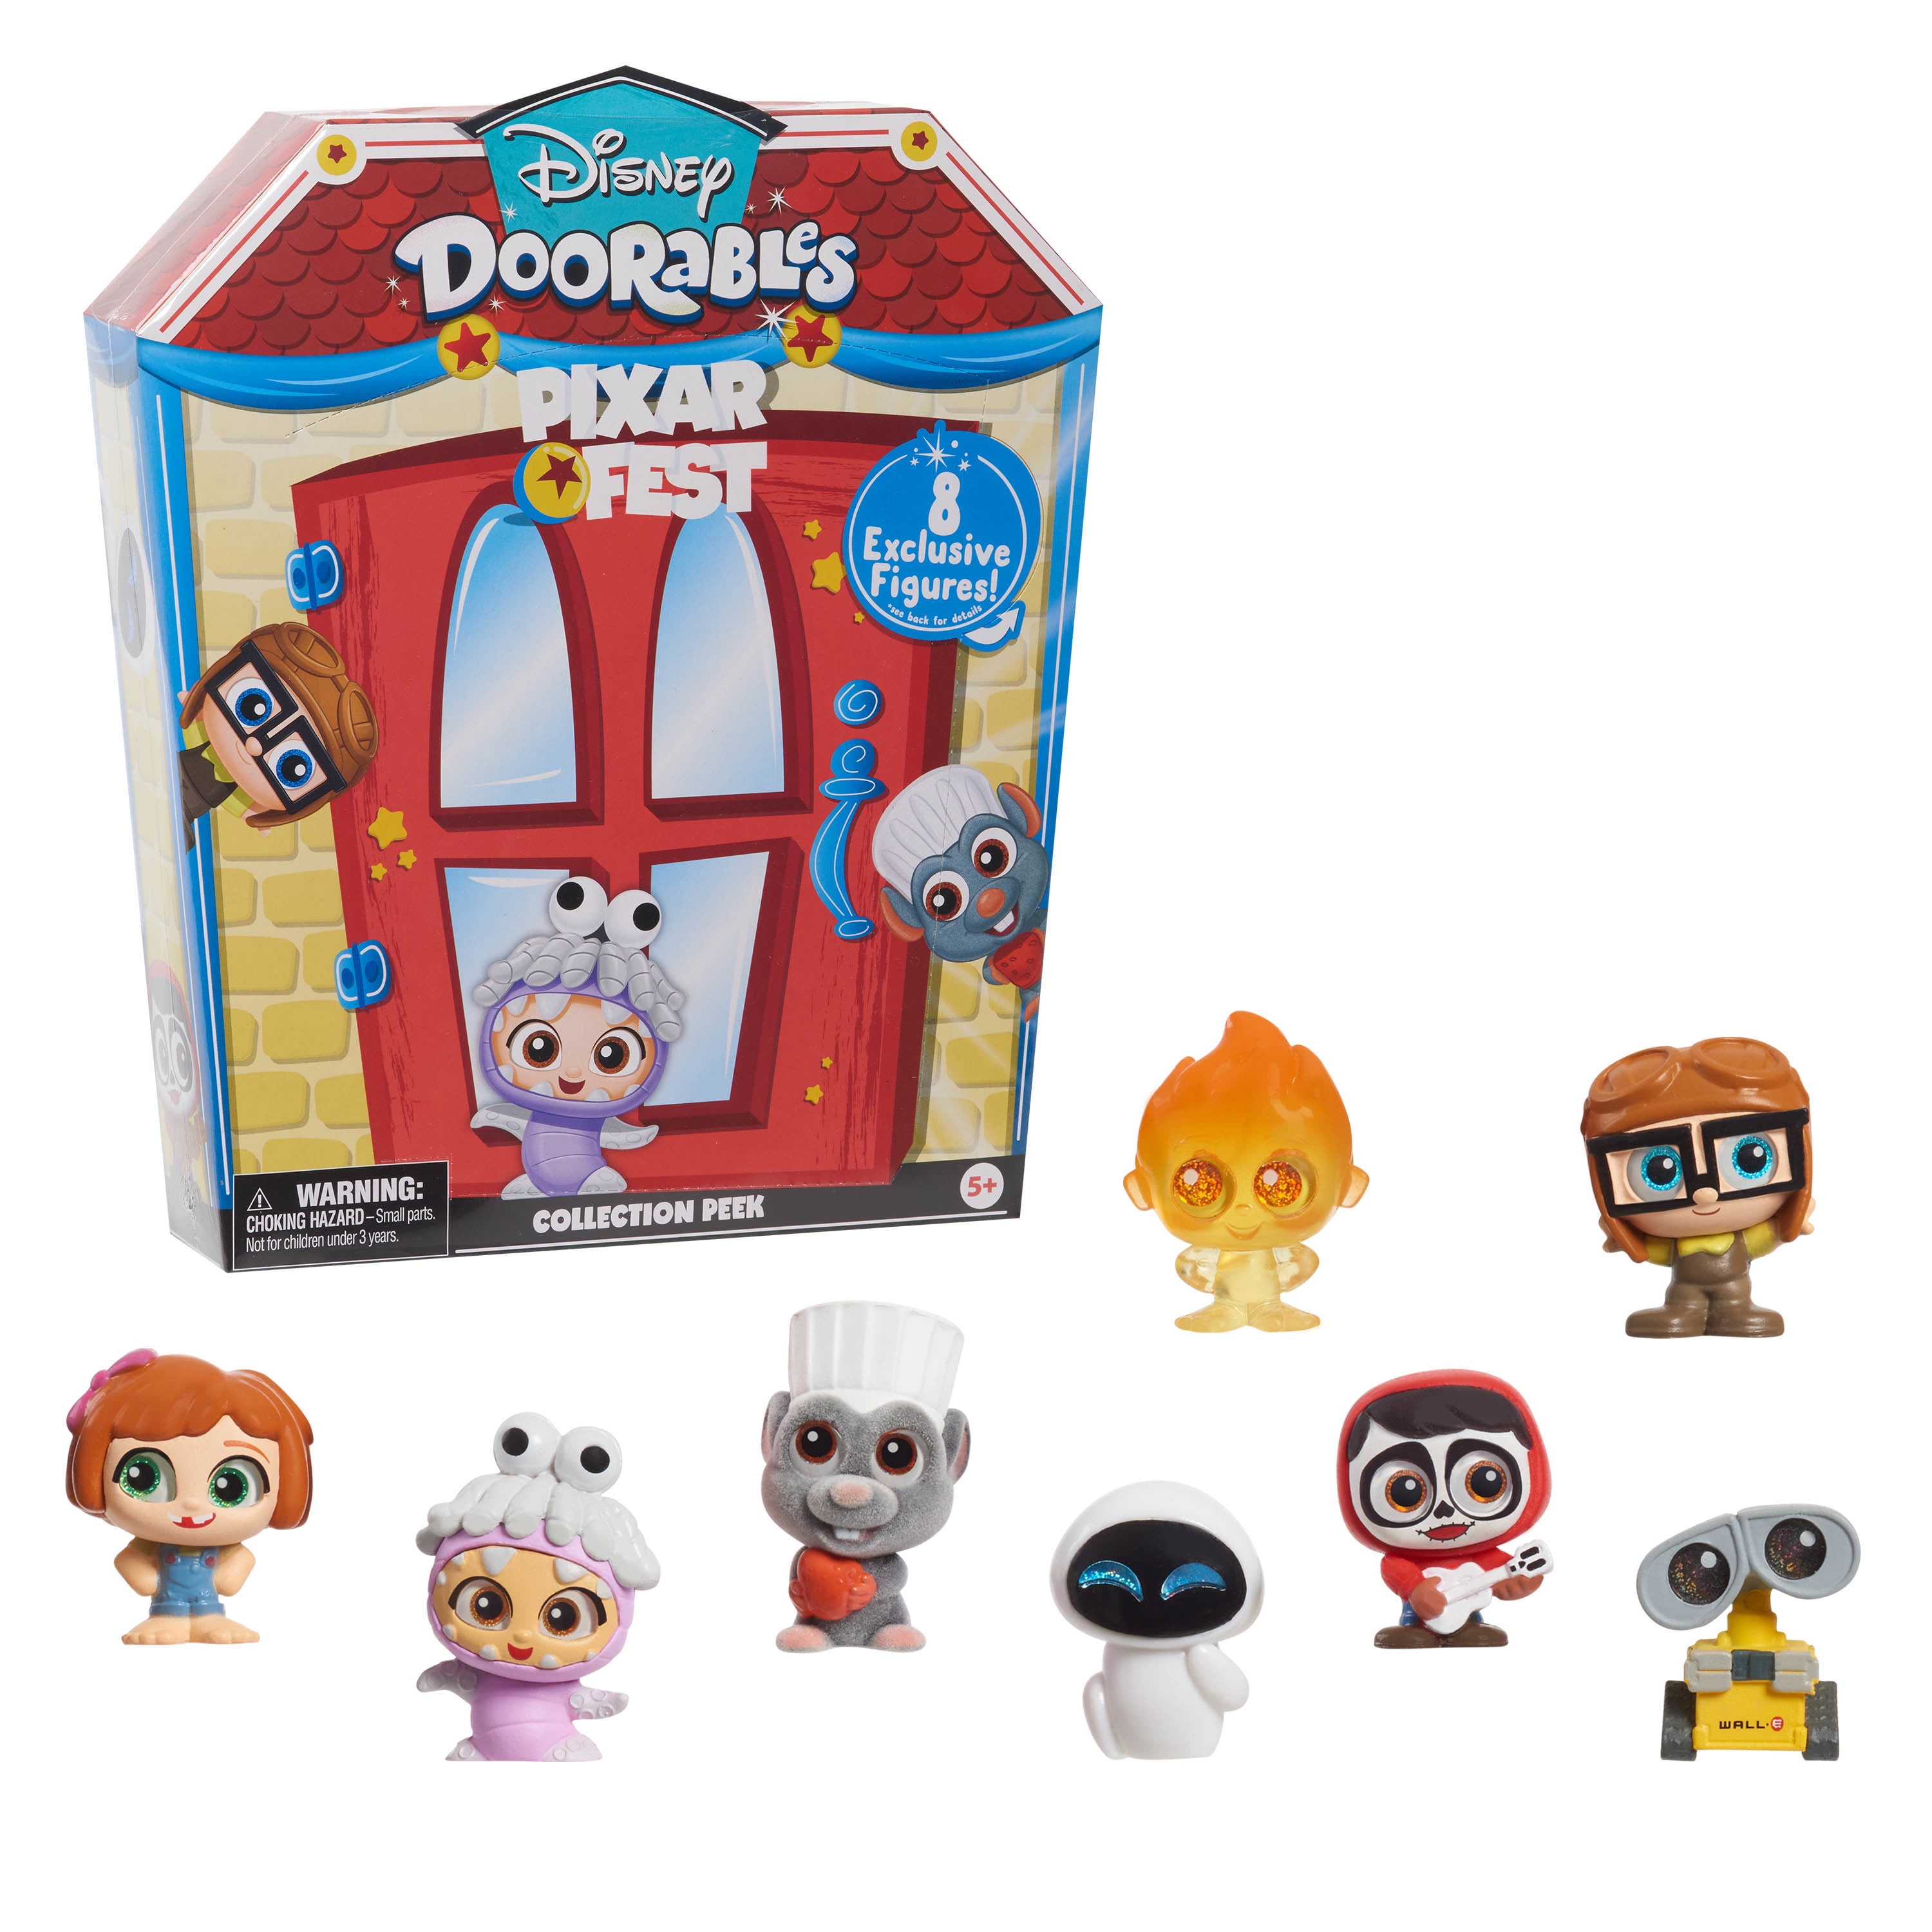 Disney Doorables Pixar Fest Collection Peek, Kids Toys for Ages 5 up